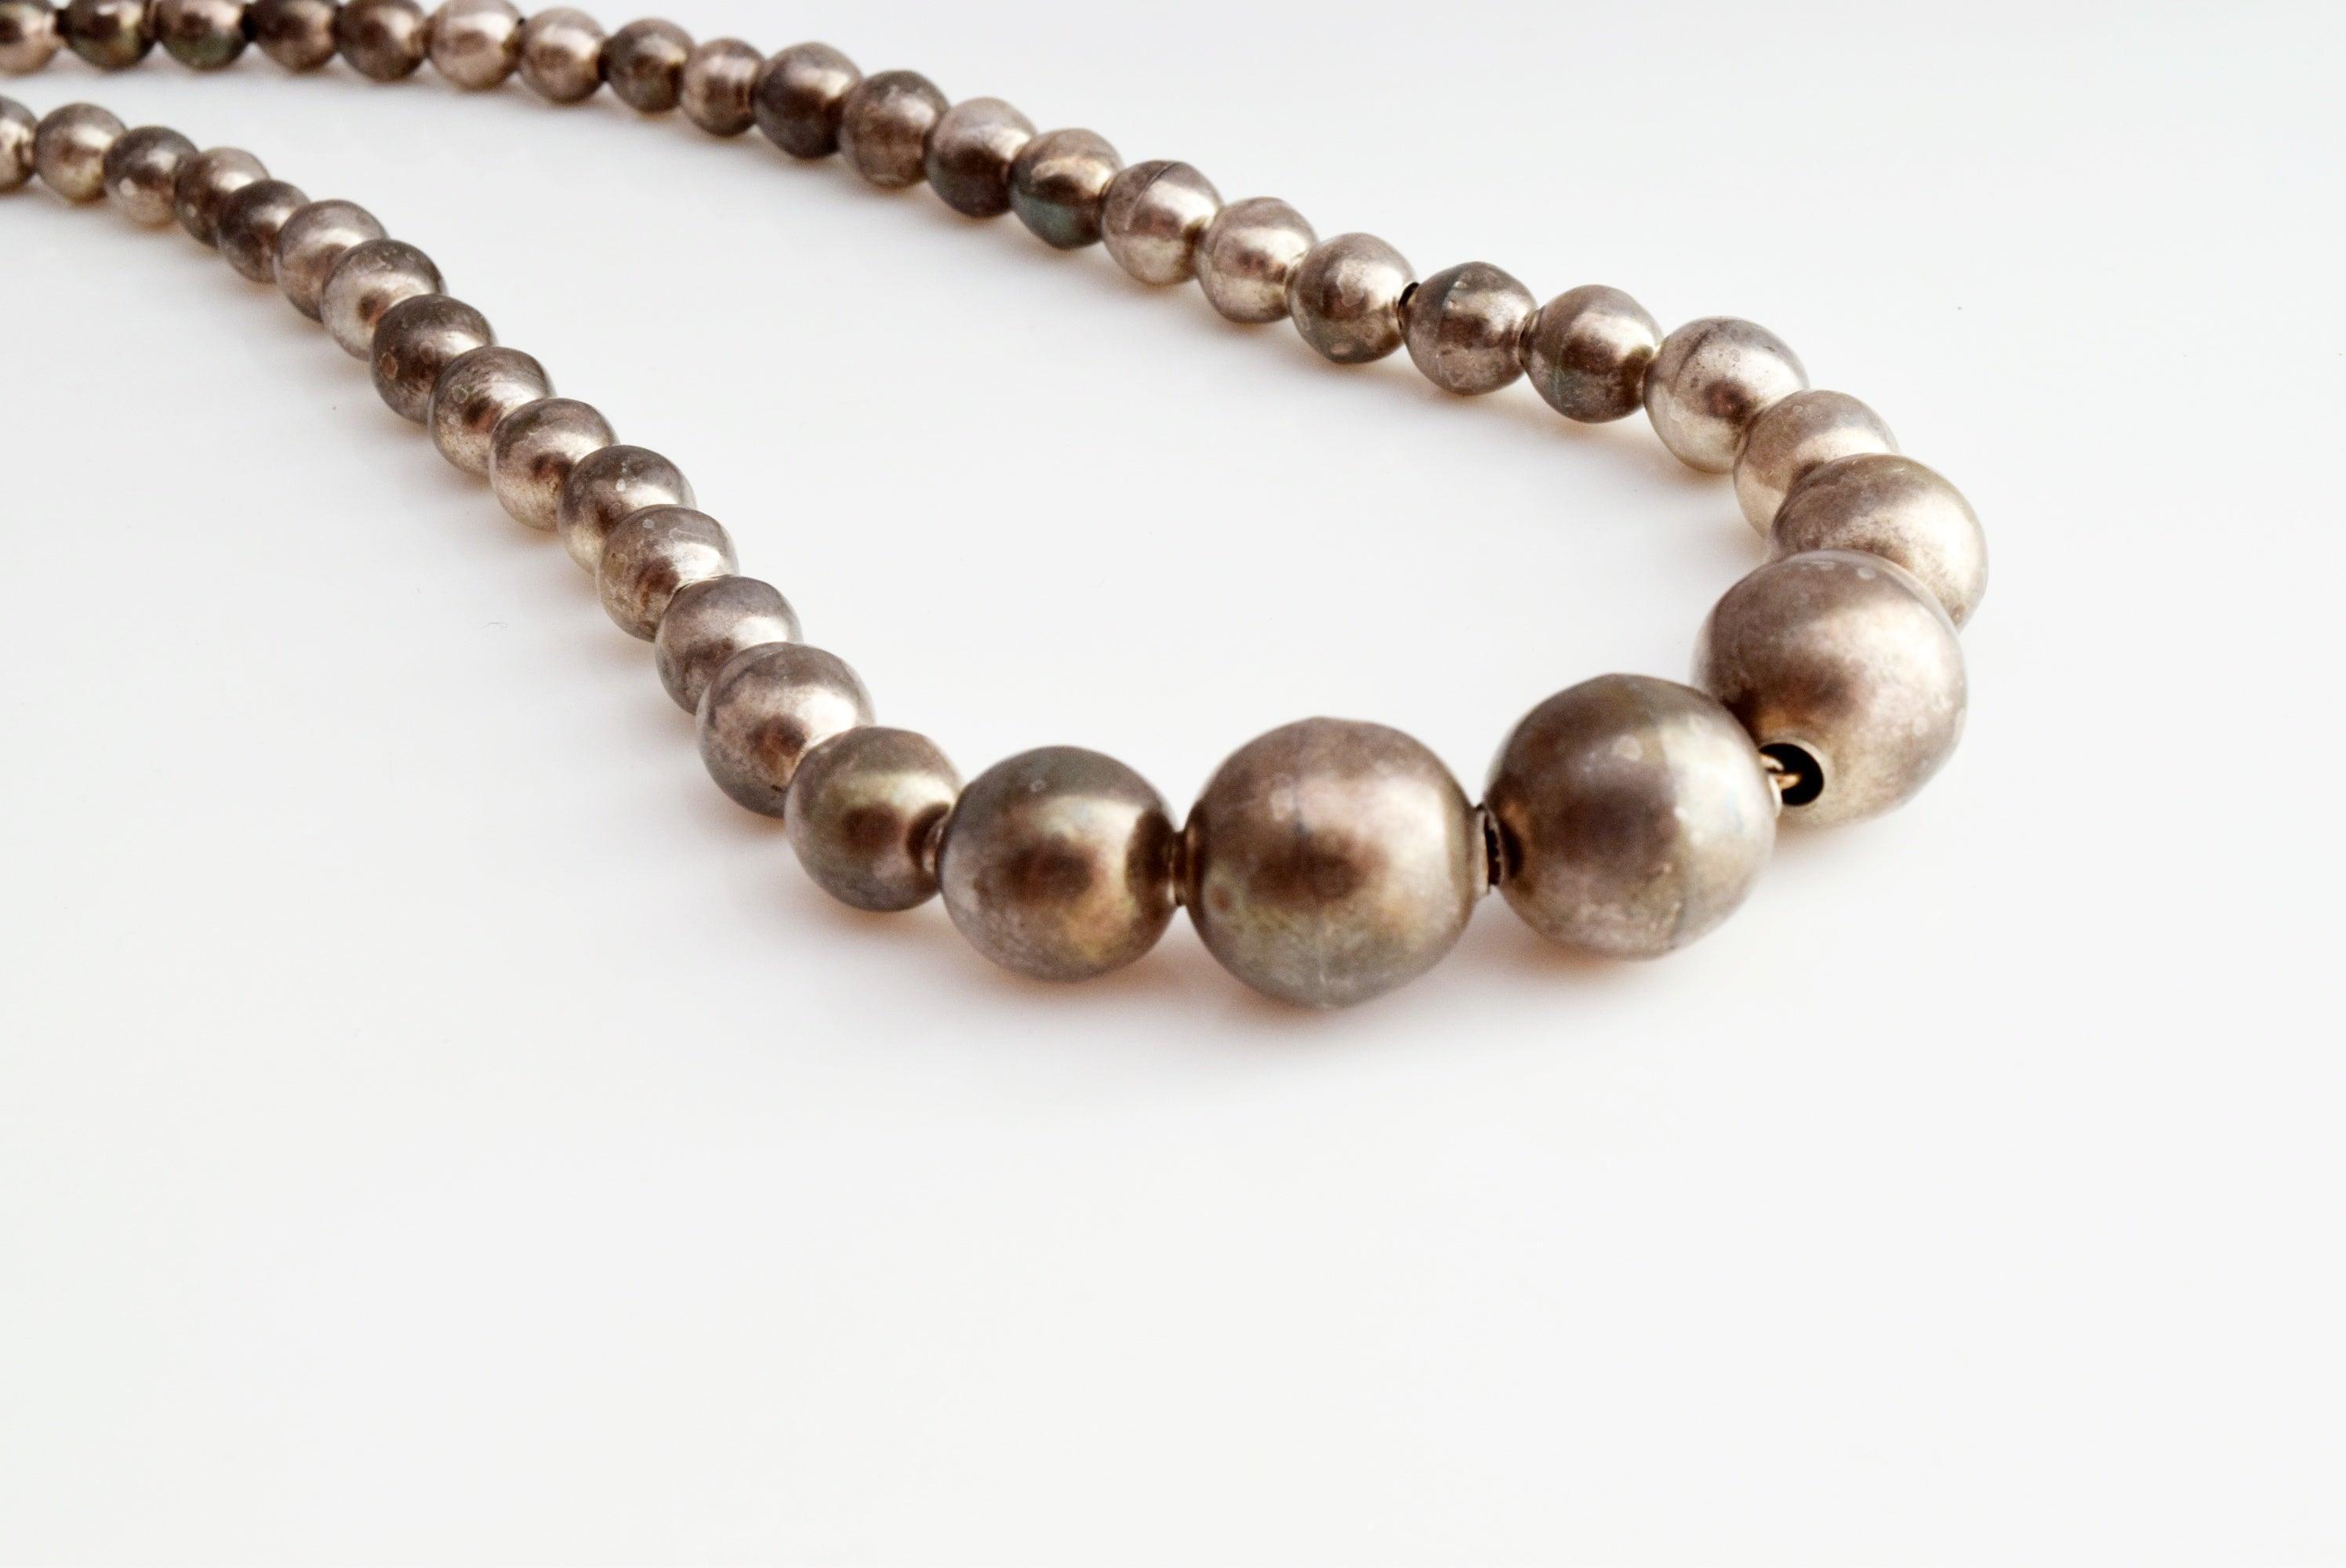 Sterling Silver 1.2mm Diamond-Cut Ball Necklace Chain – Hawaiian Silver  Jewelry